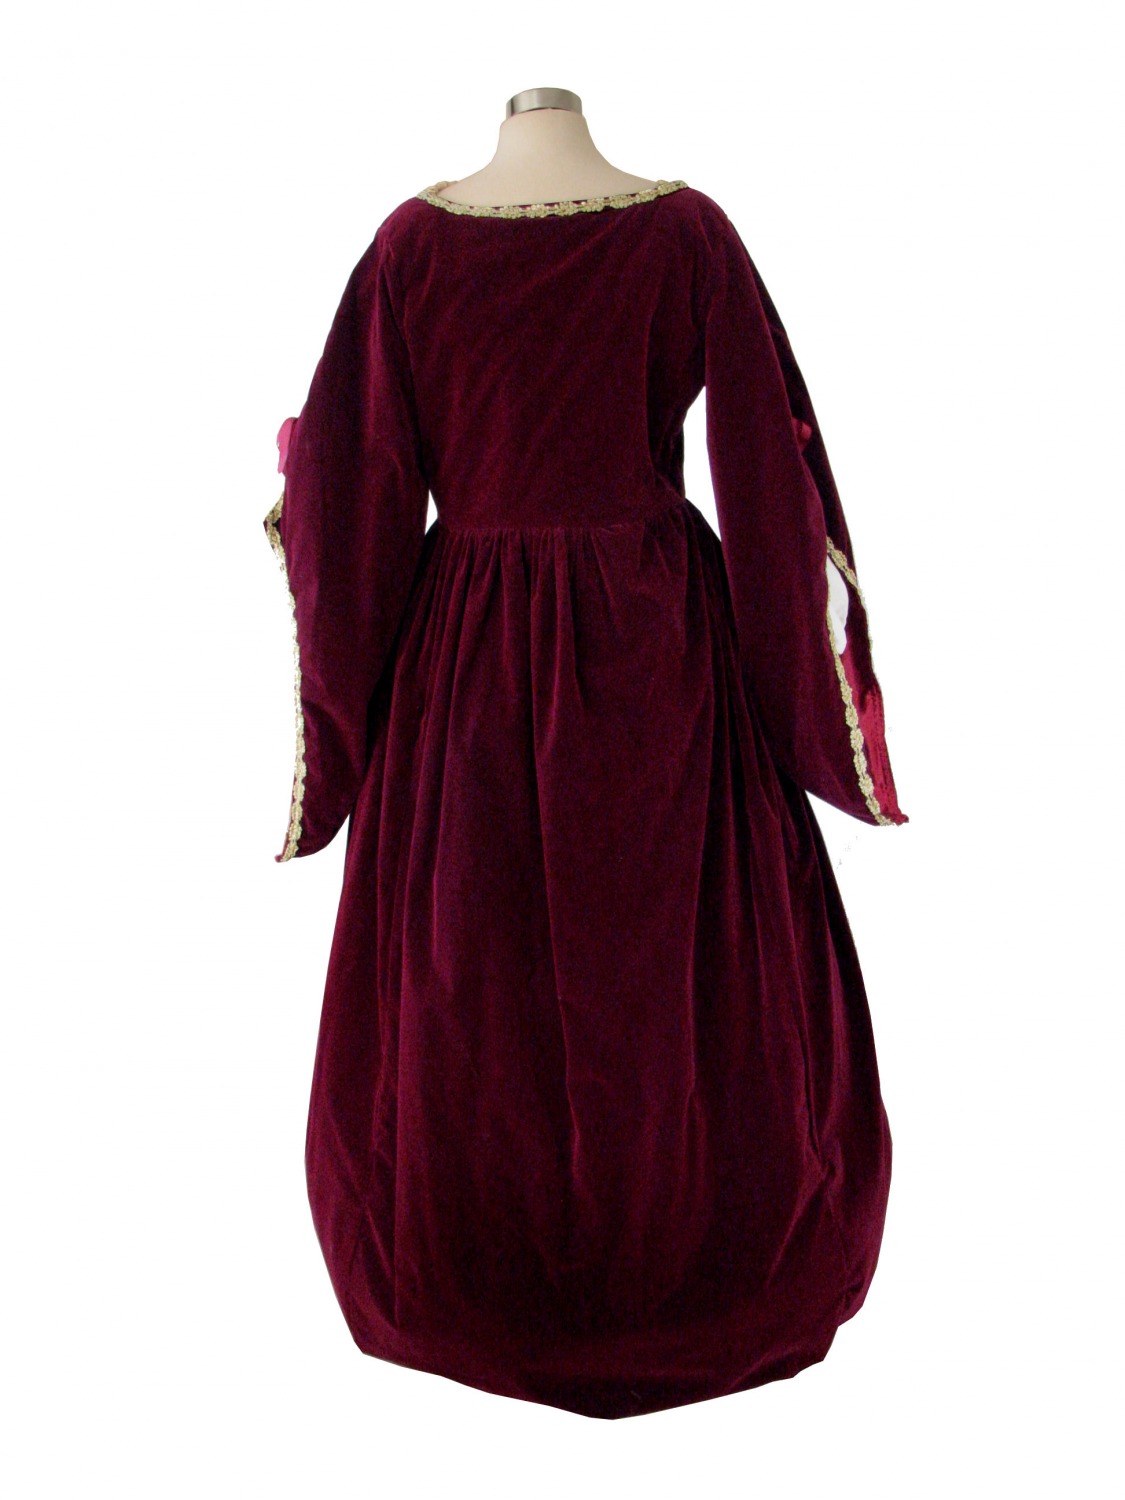 Ladies Medieval Tudor Costume And Headdress Size 14 - 18 Image